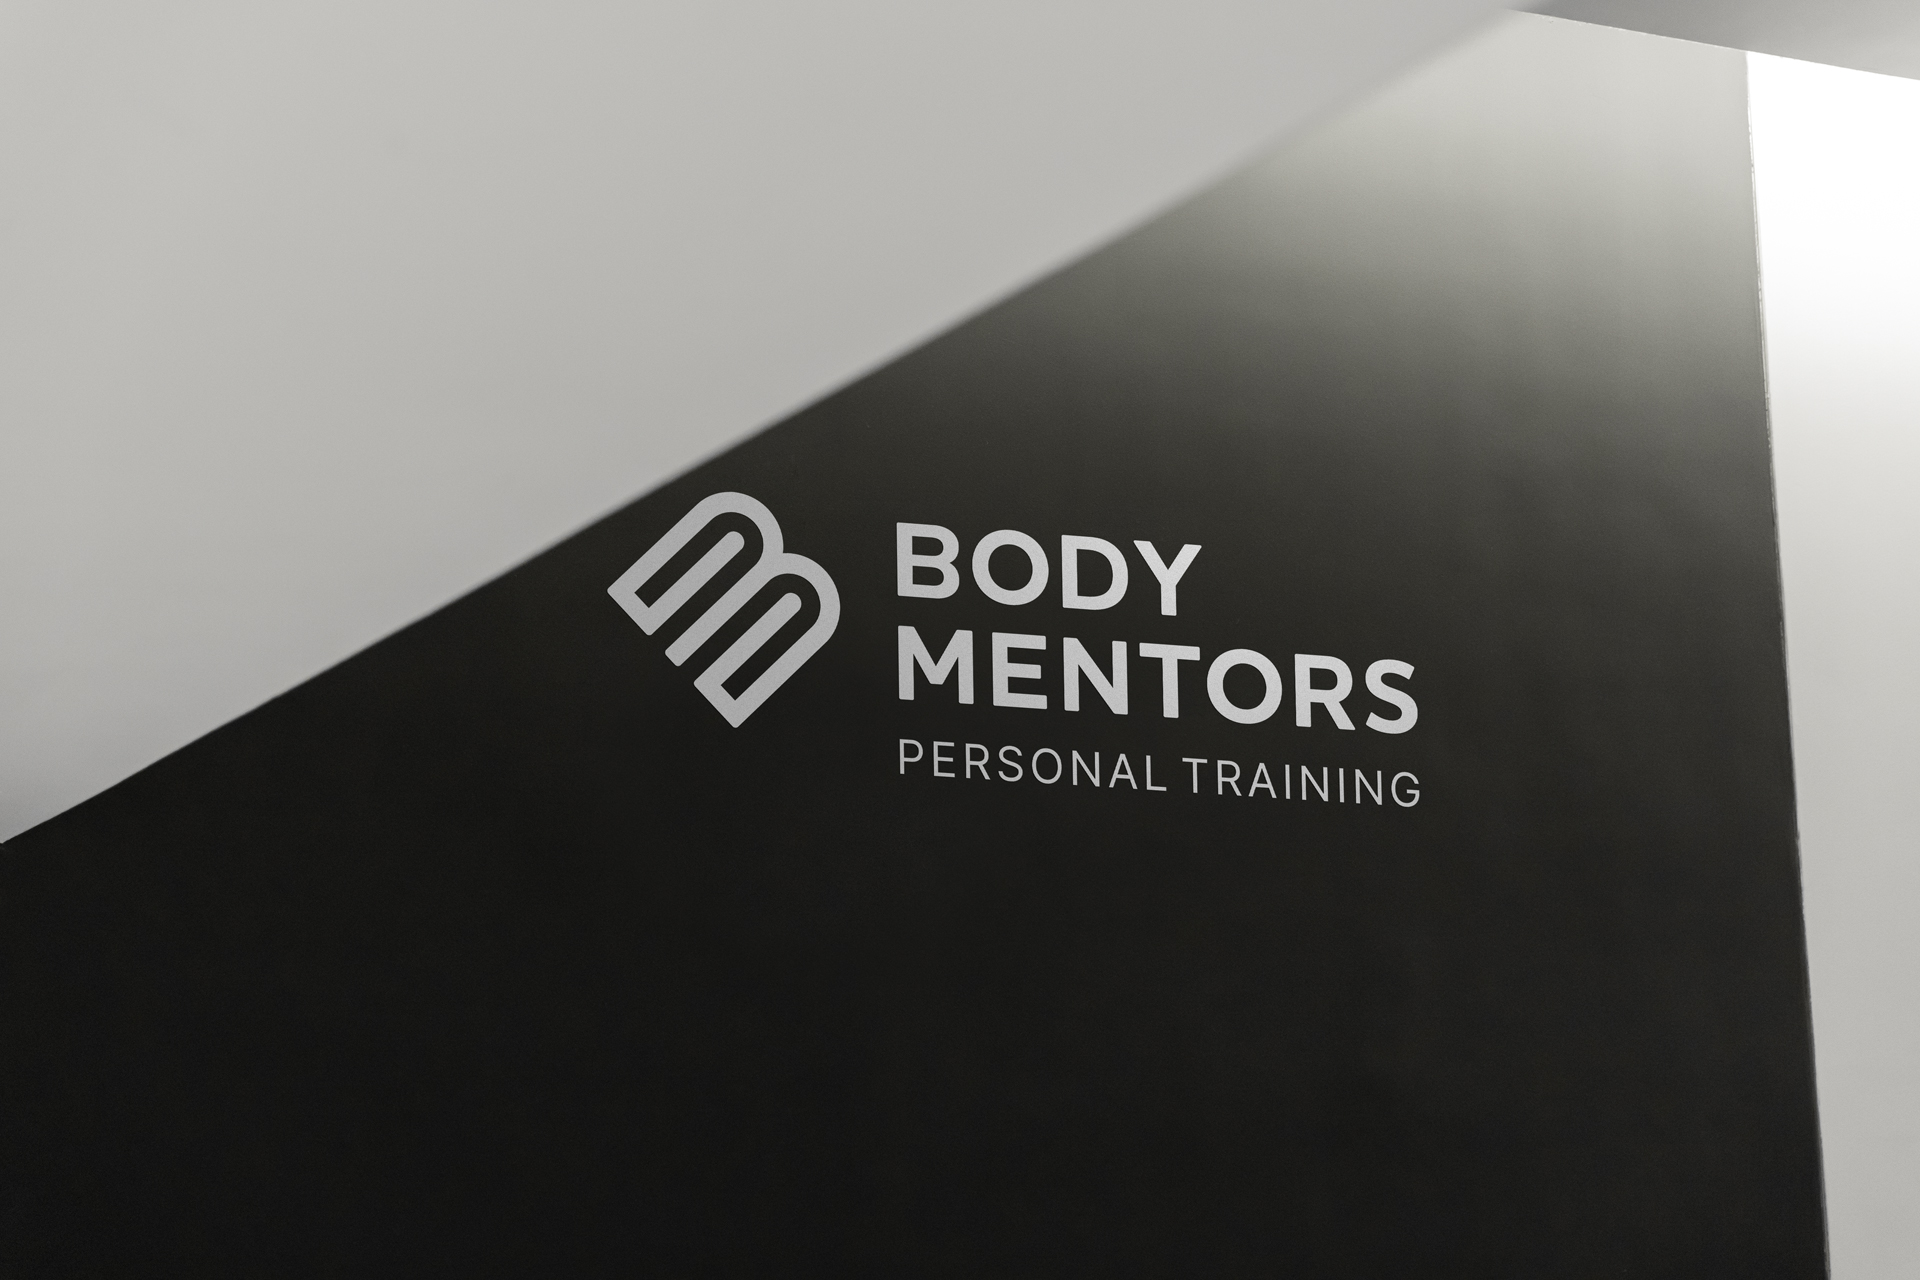 Body Mentors logo signage